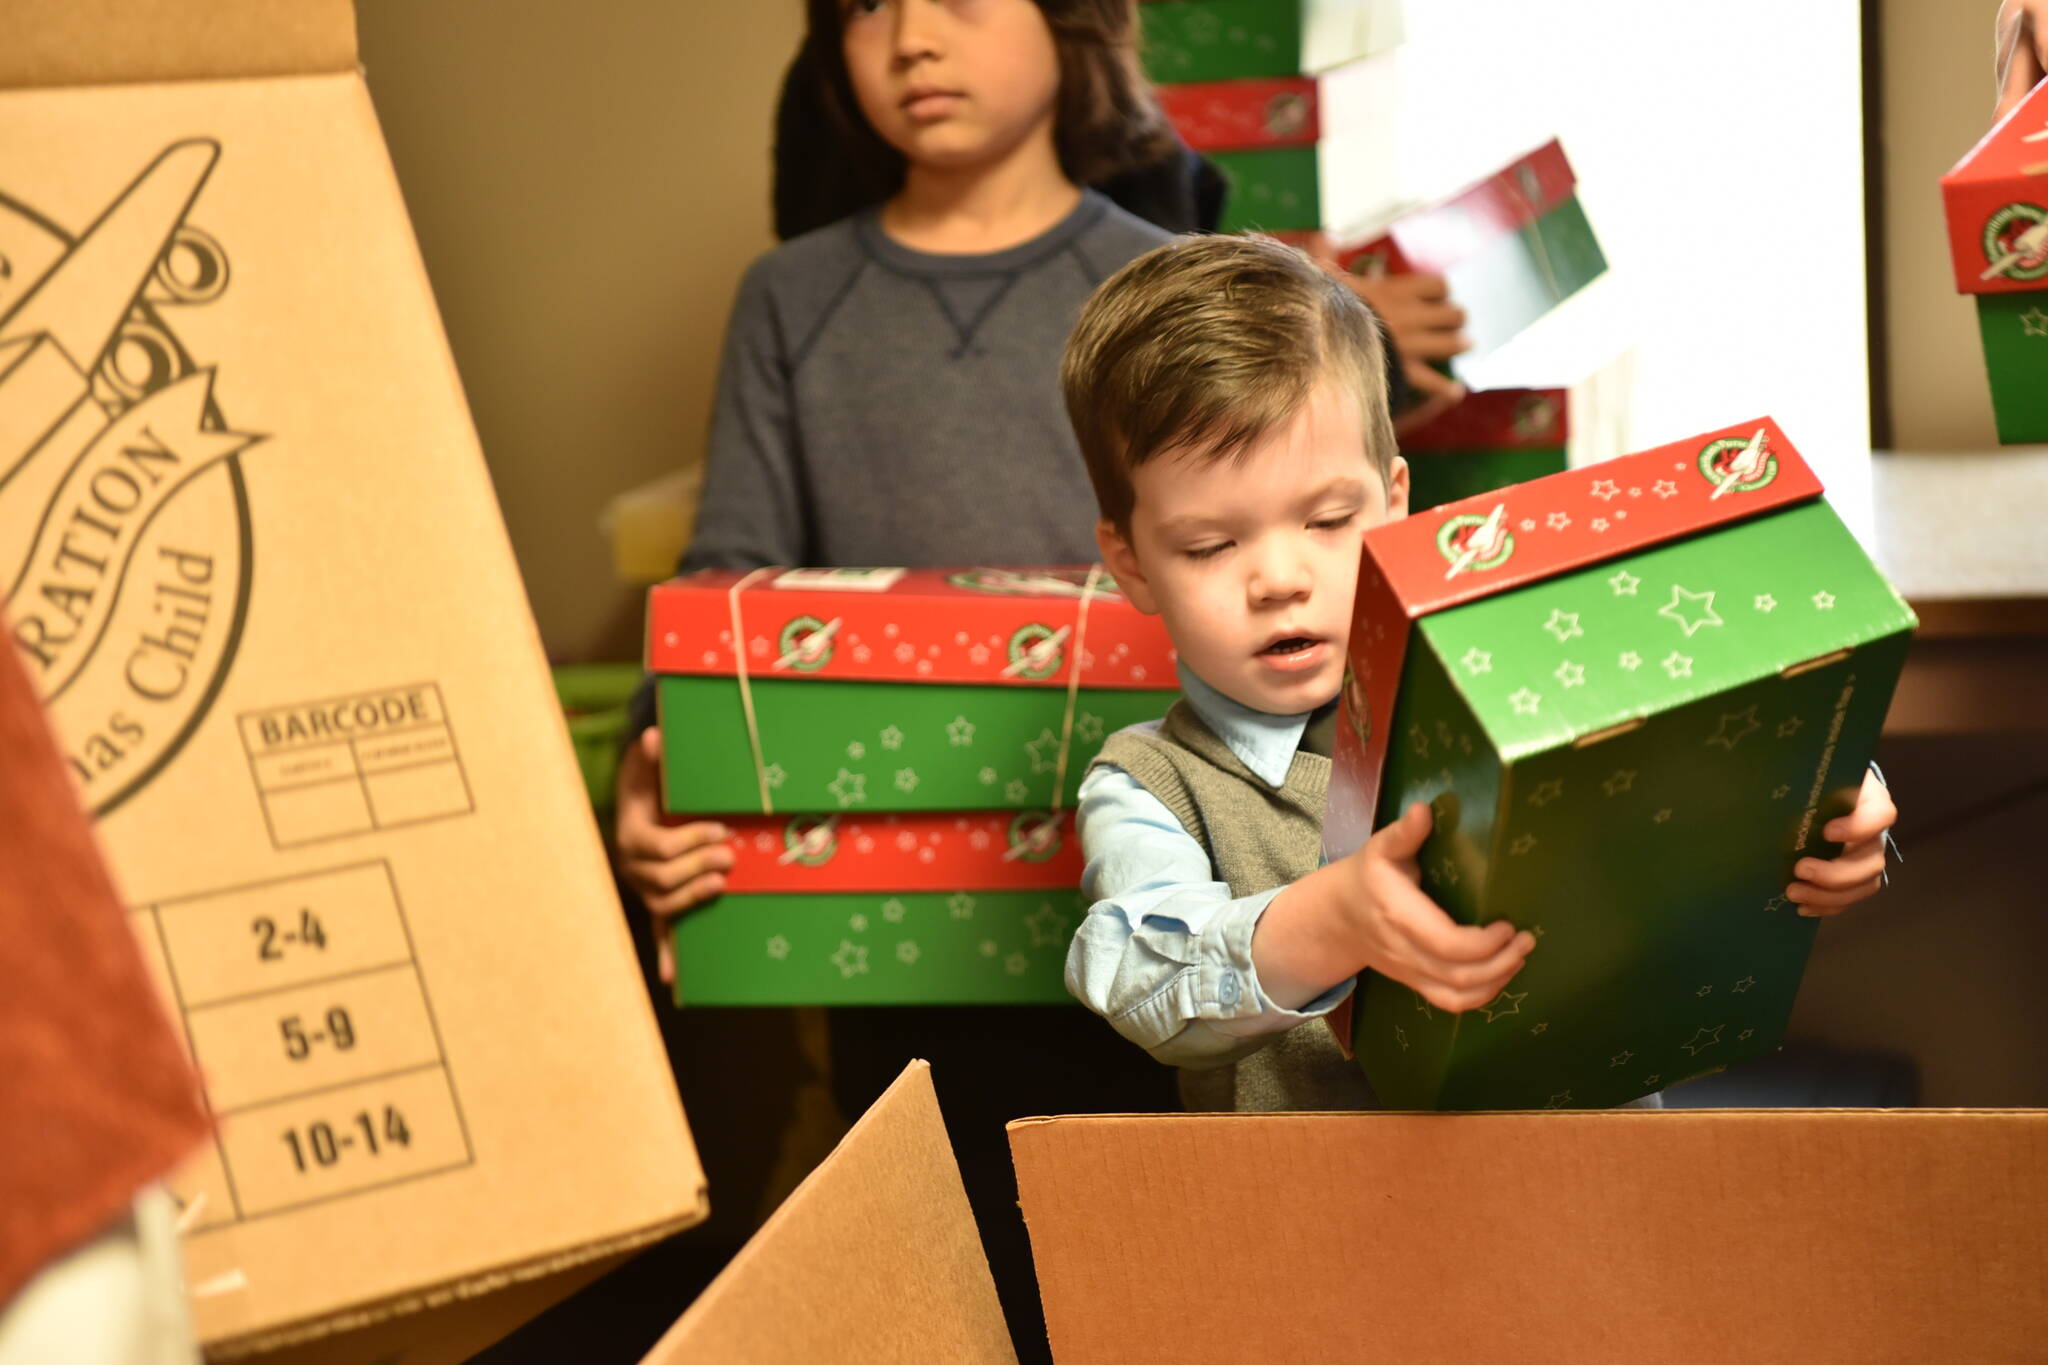 Luke Garrard, 3, puts a shoebox into the shipping box.